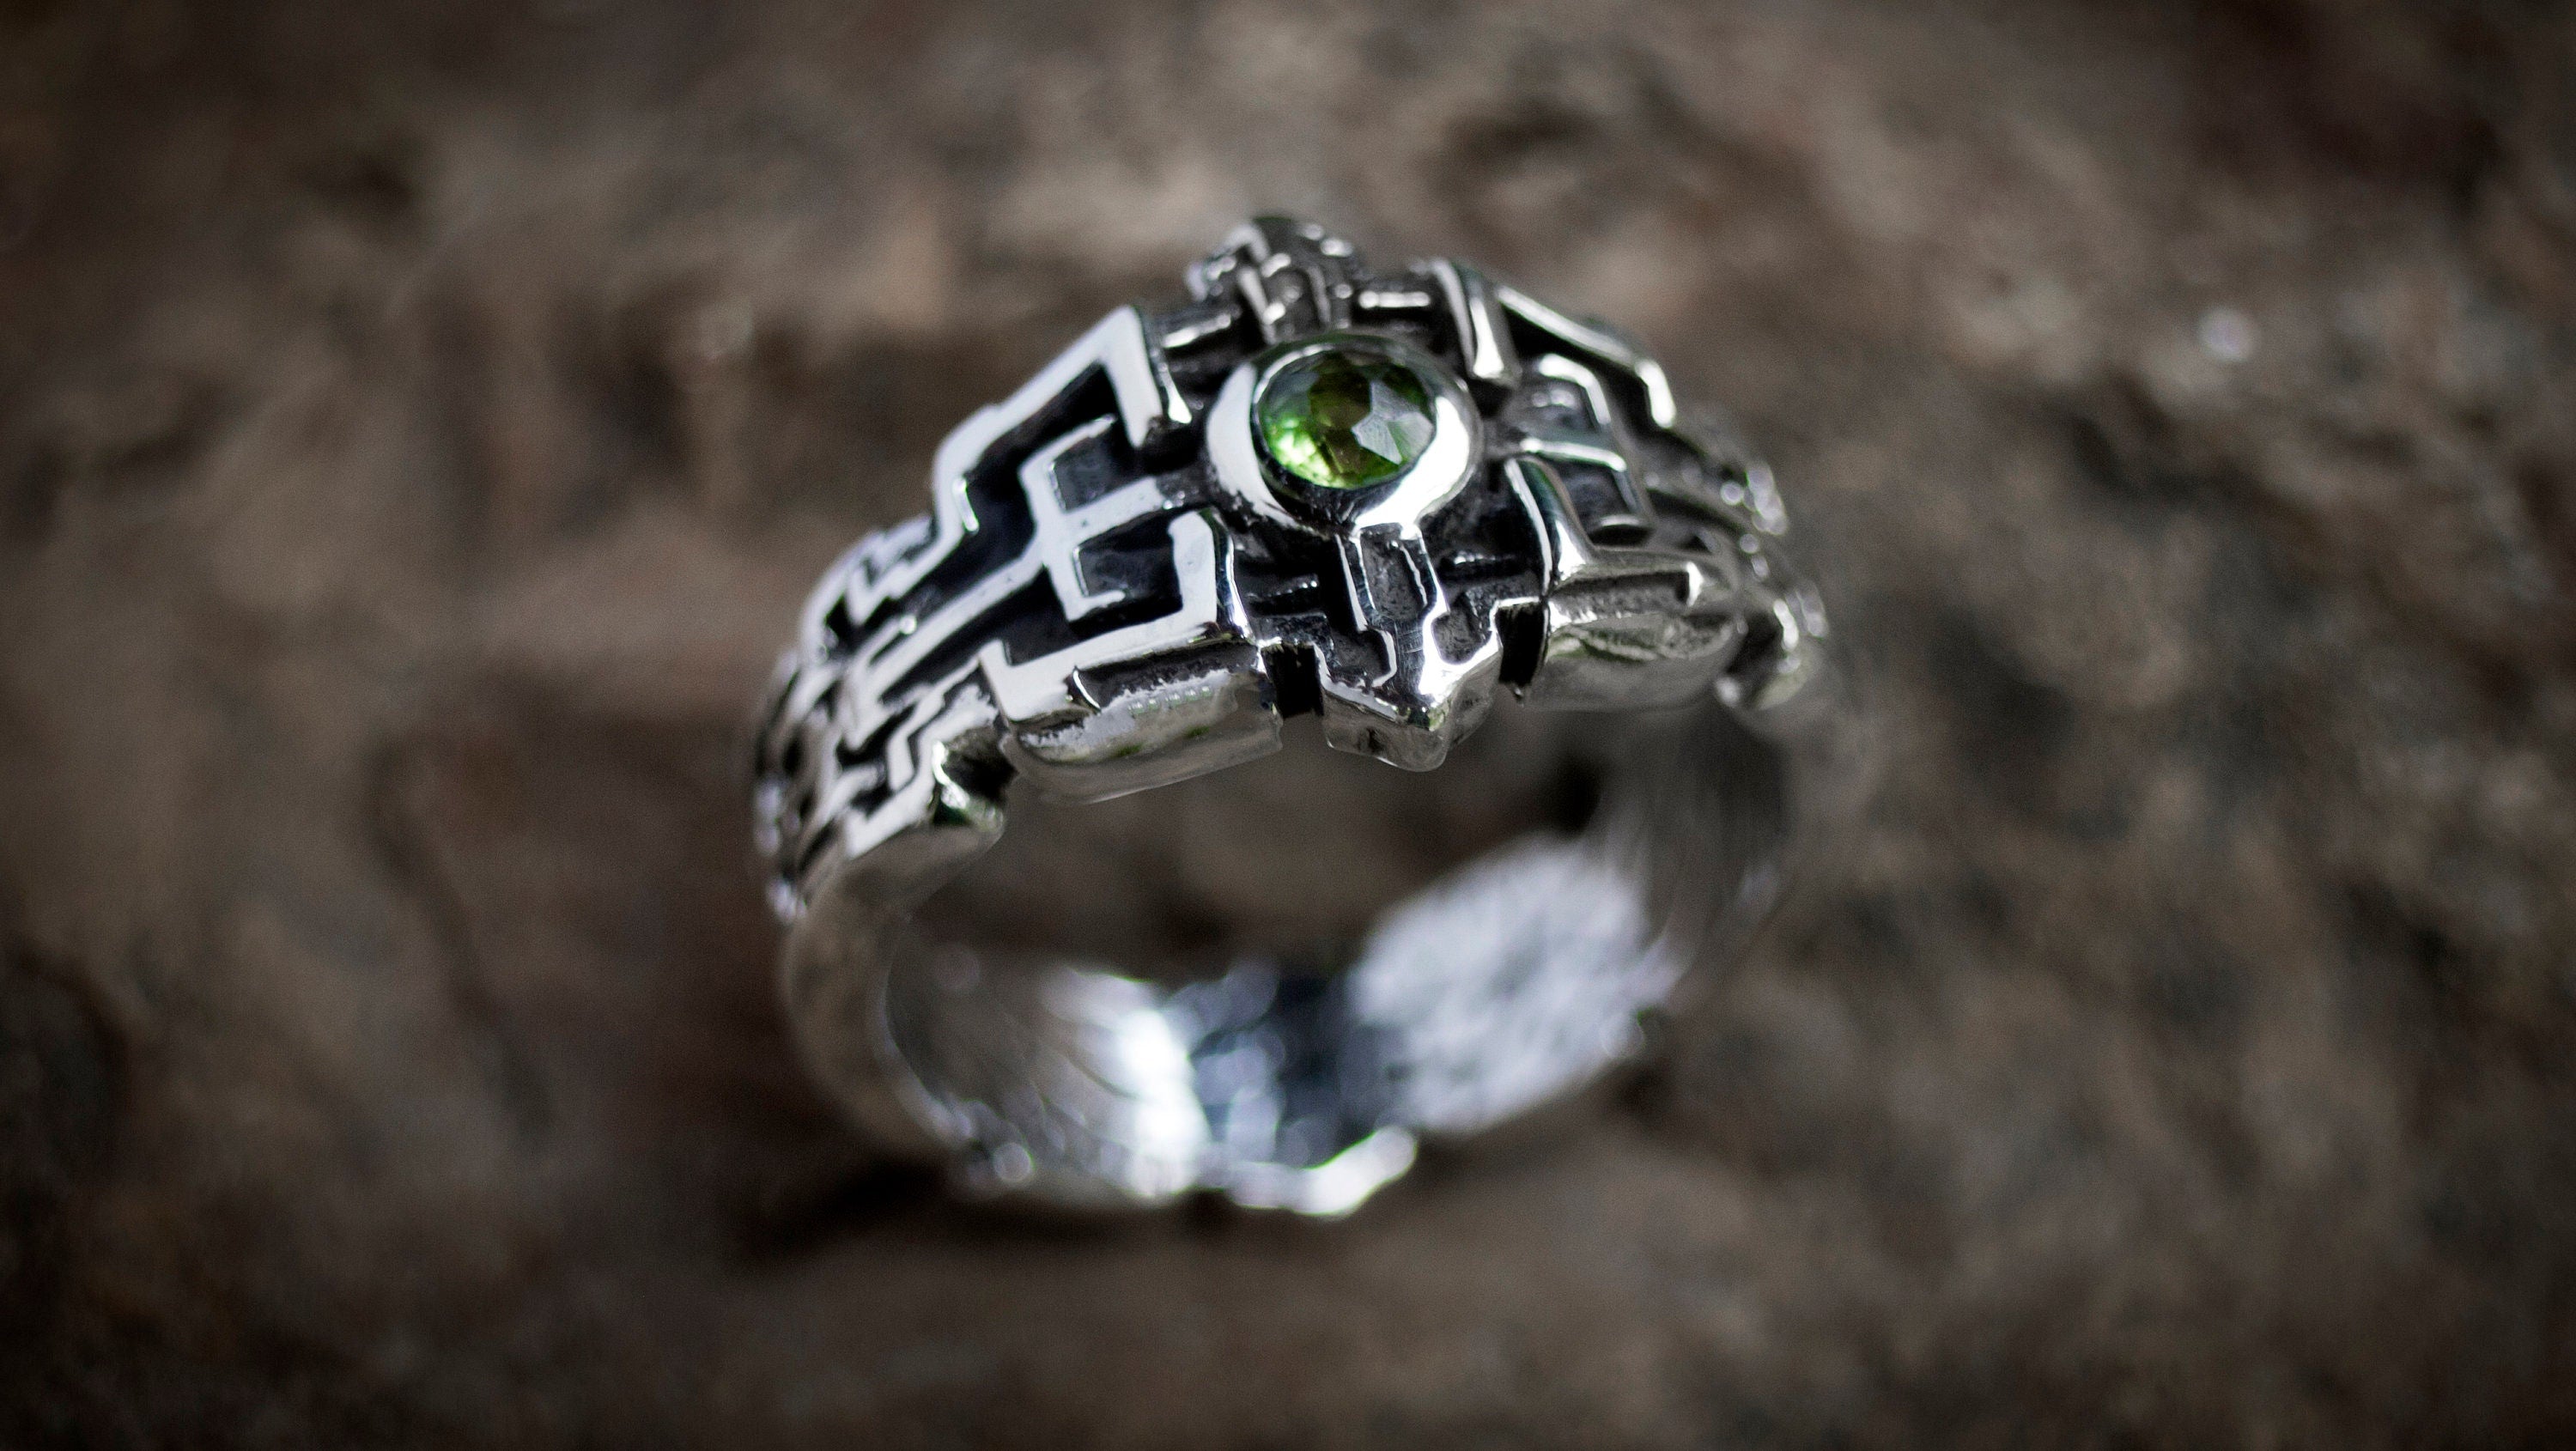 Geek Engagement Ring for Men